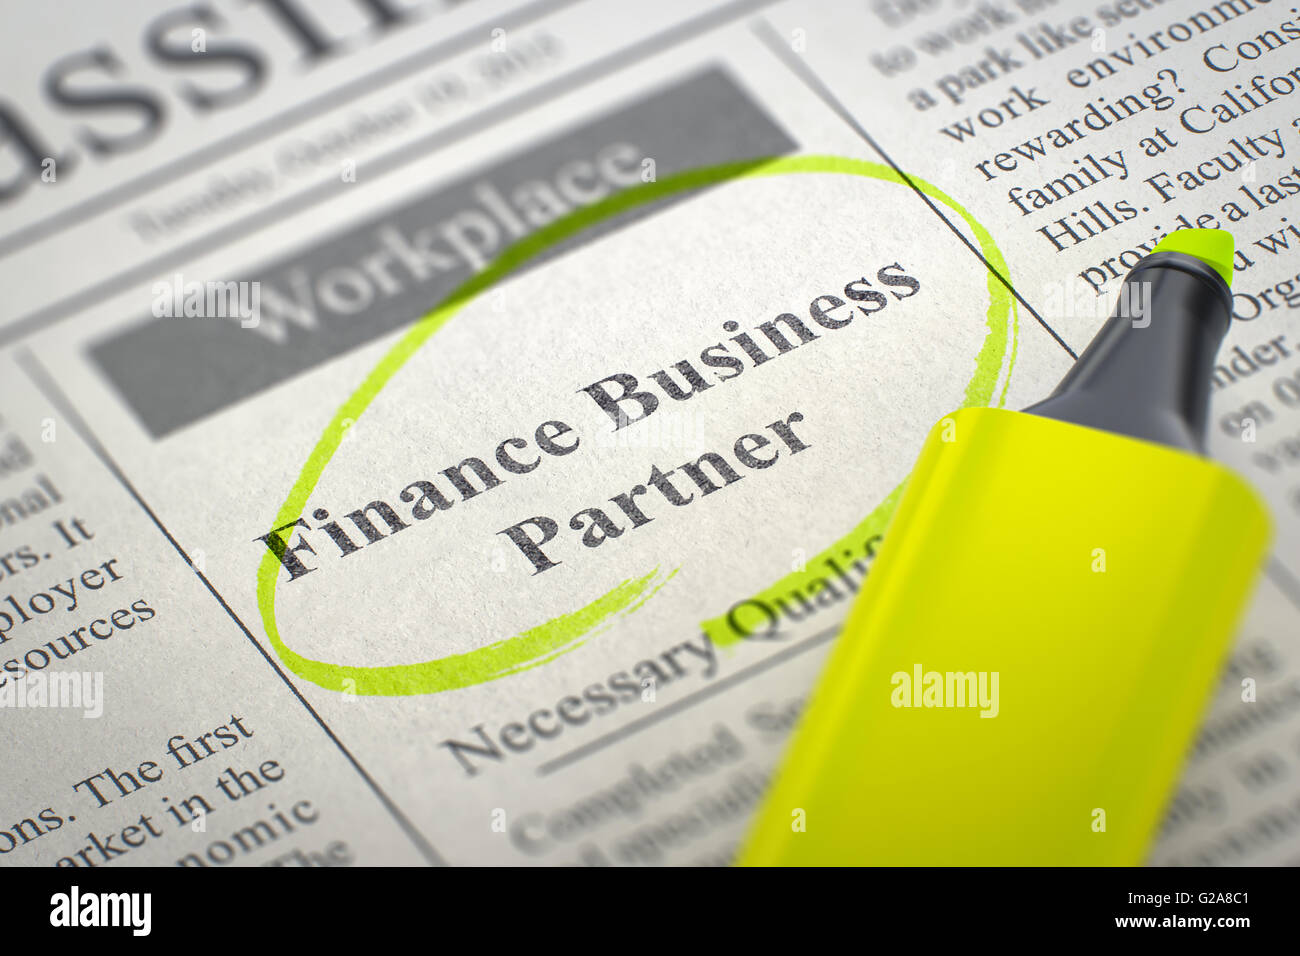 Job Opening Finance Business Partner. Stockfoto